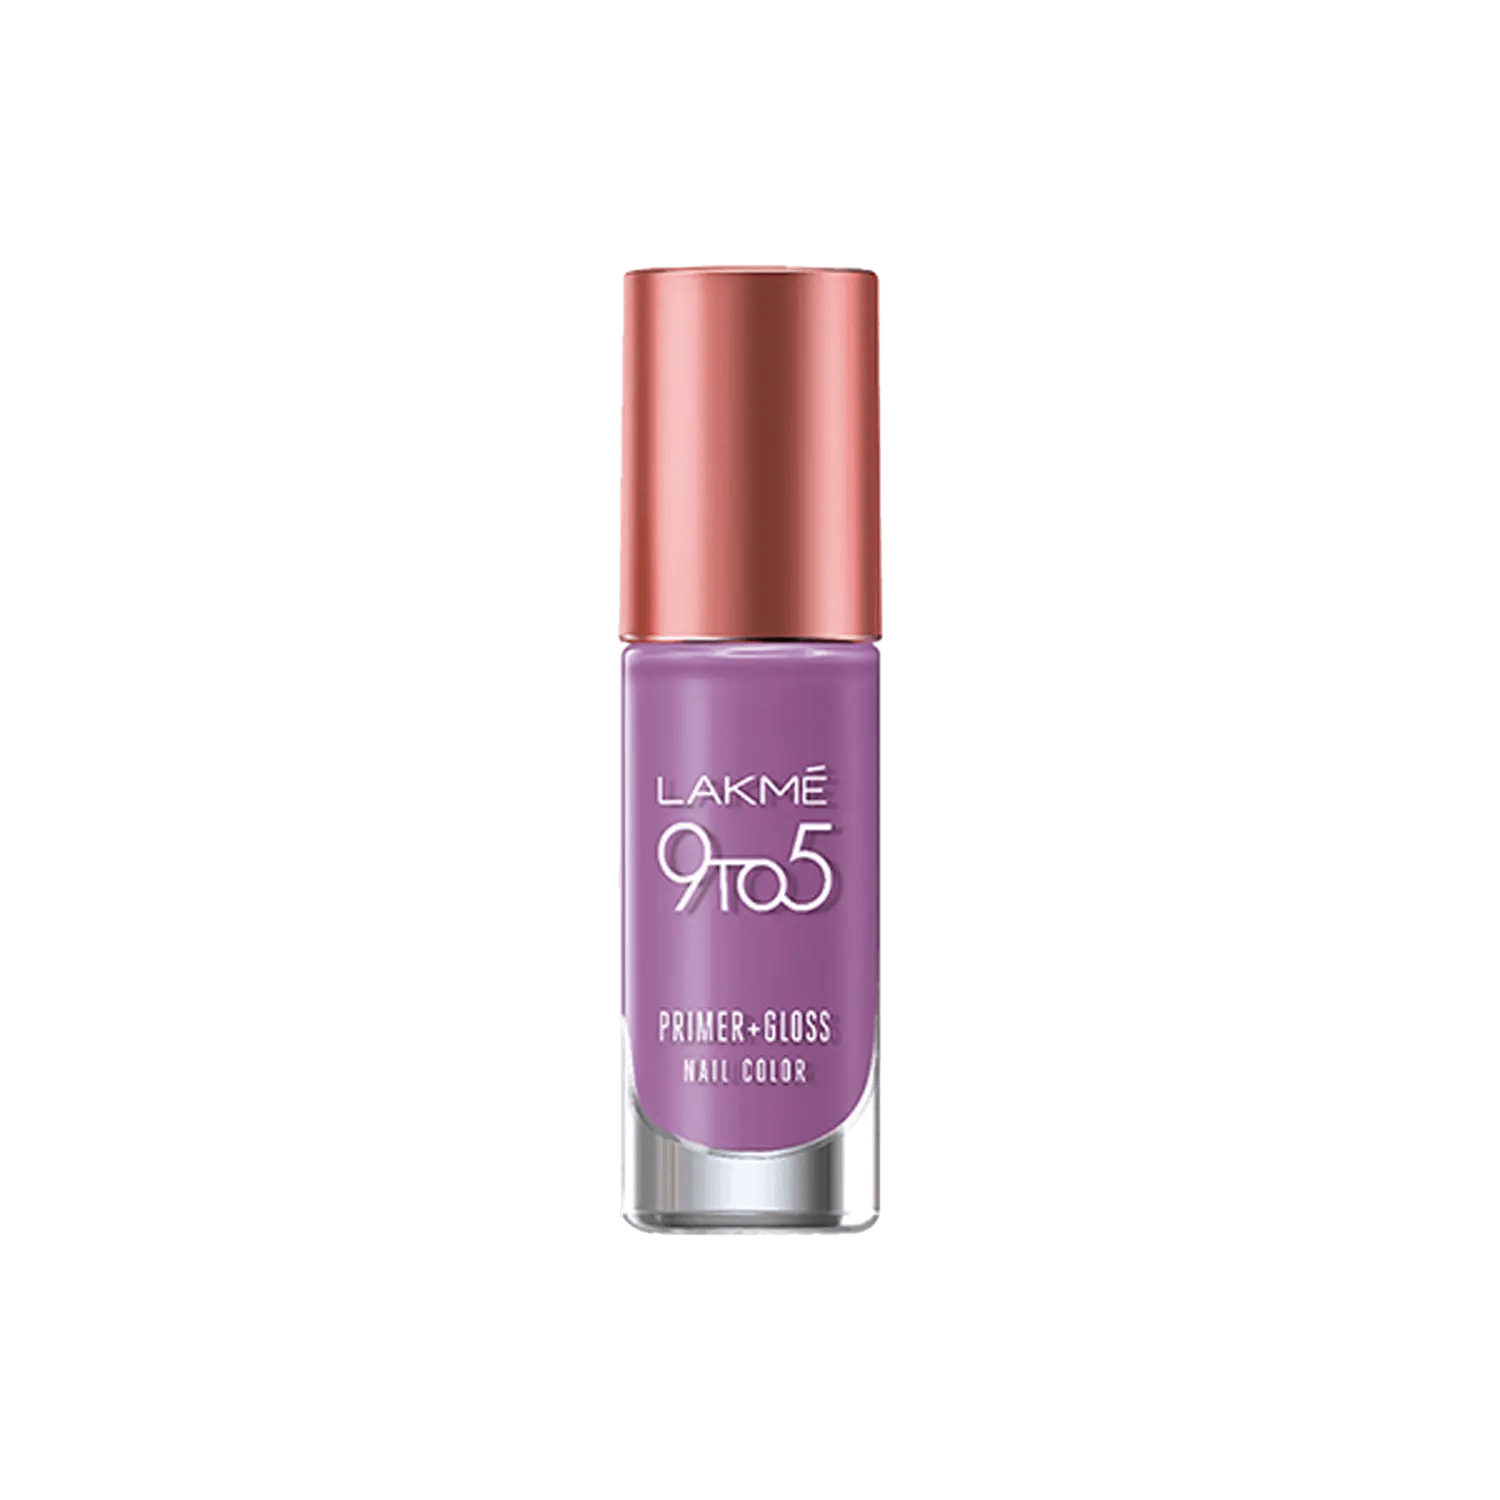 Lakme | Lakme 9To5 Primer + Gloss Nail Color - Lilac Link (6ml)